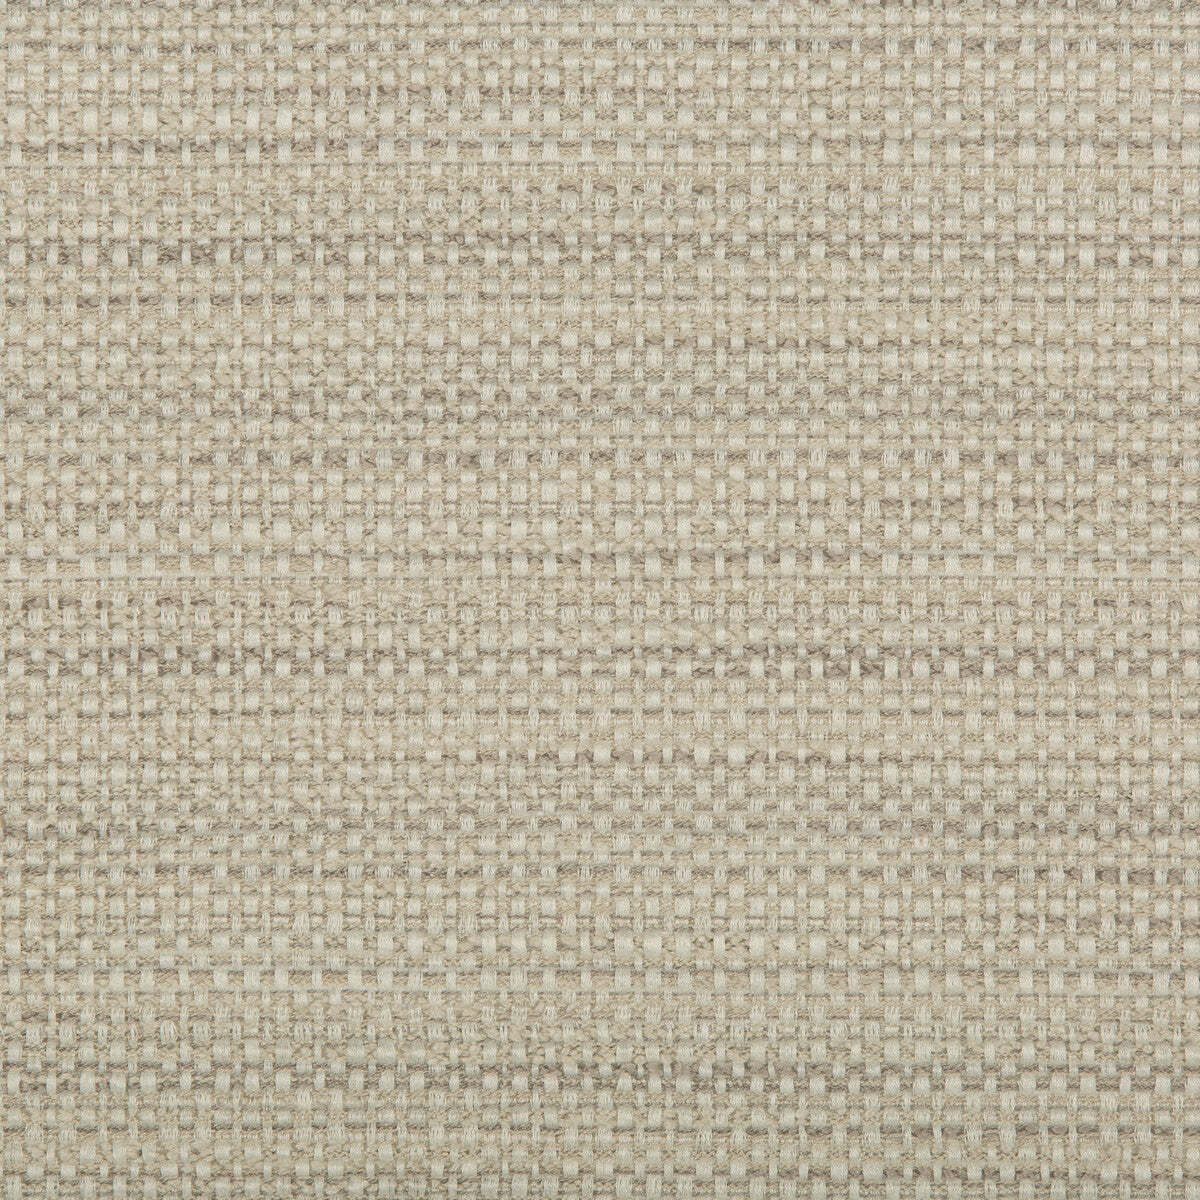 Kravet Smart fabric in 30873-1611 color - pattern 30873.1611.0 - by Kravet Smart